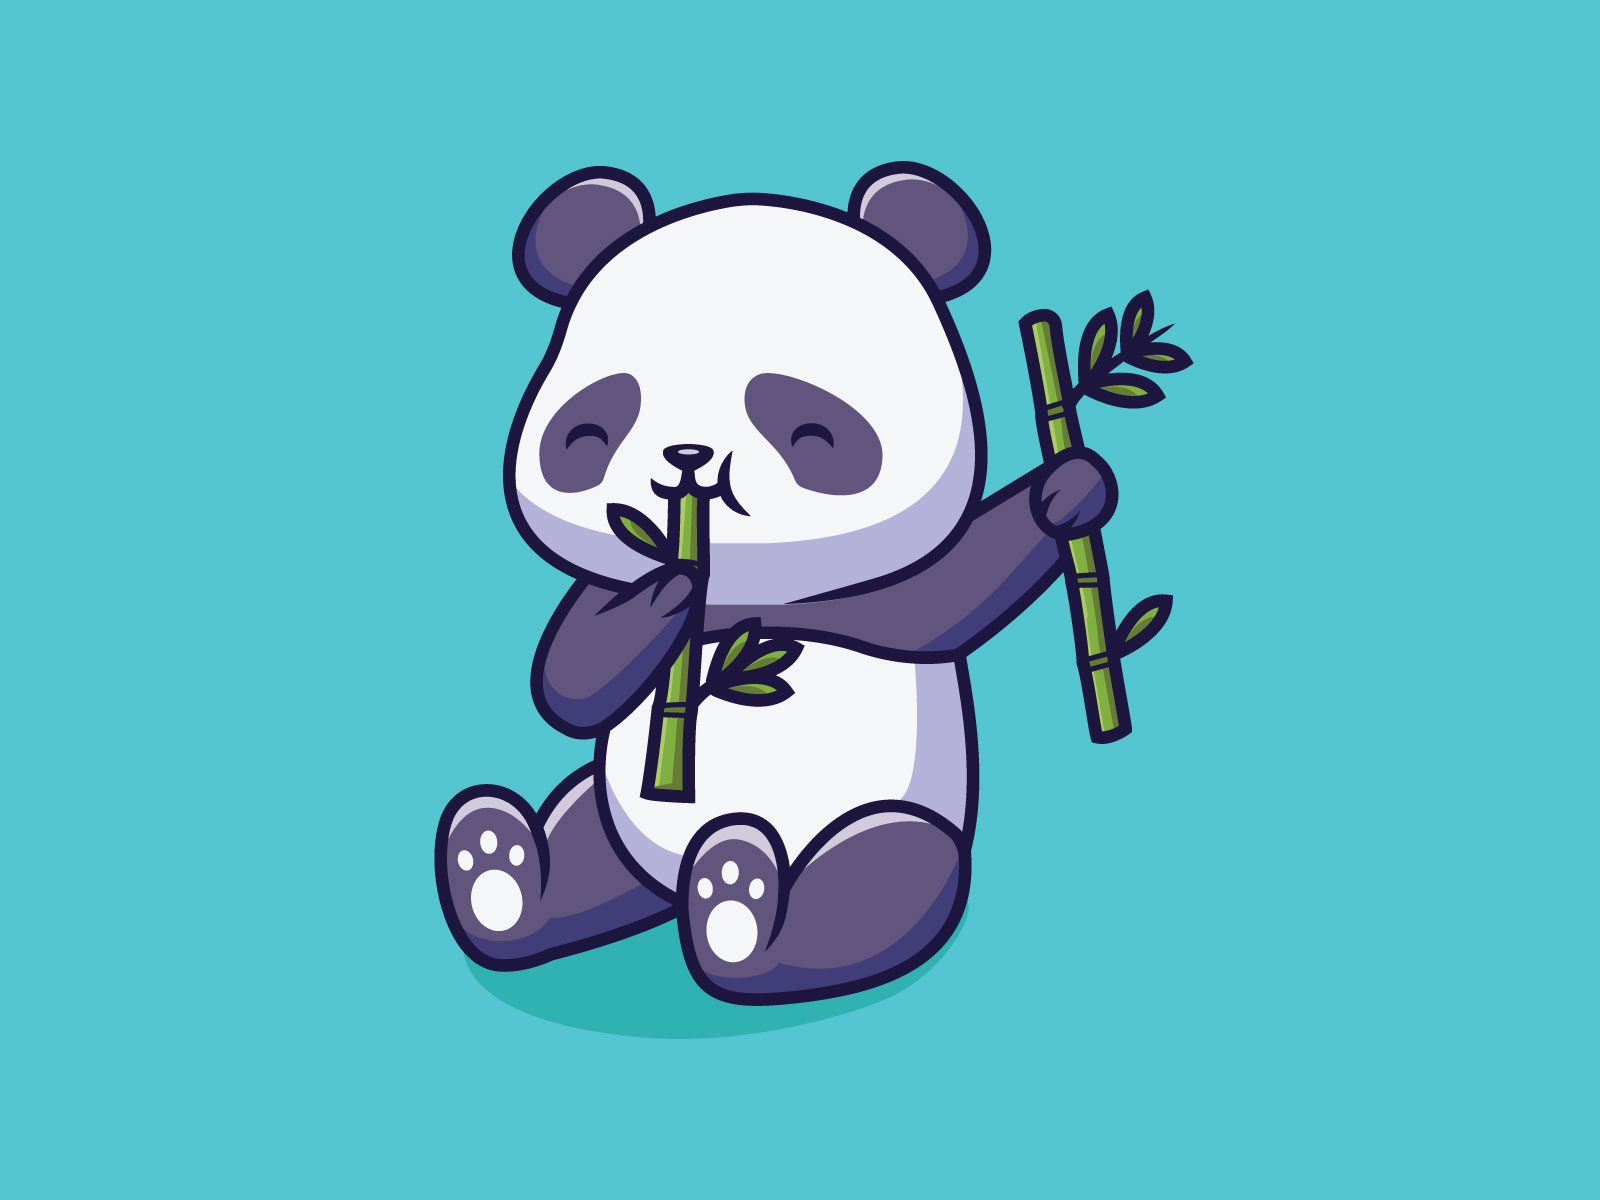 Cute panda eating bamboo cartoon illustration by bayu noviandi on Dribbble